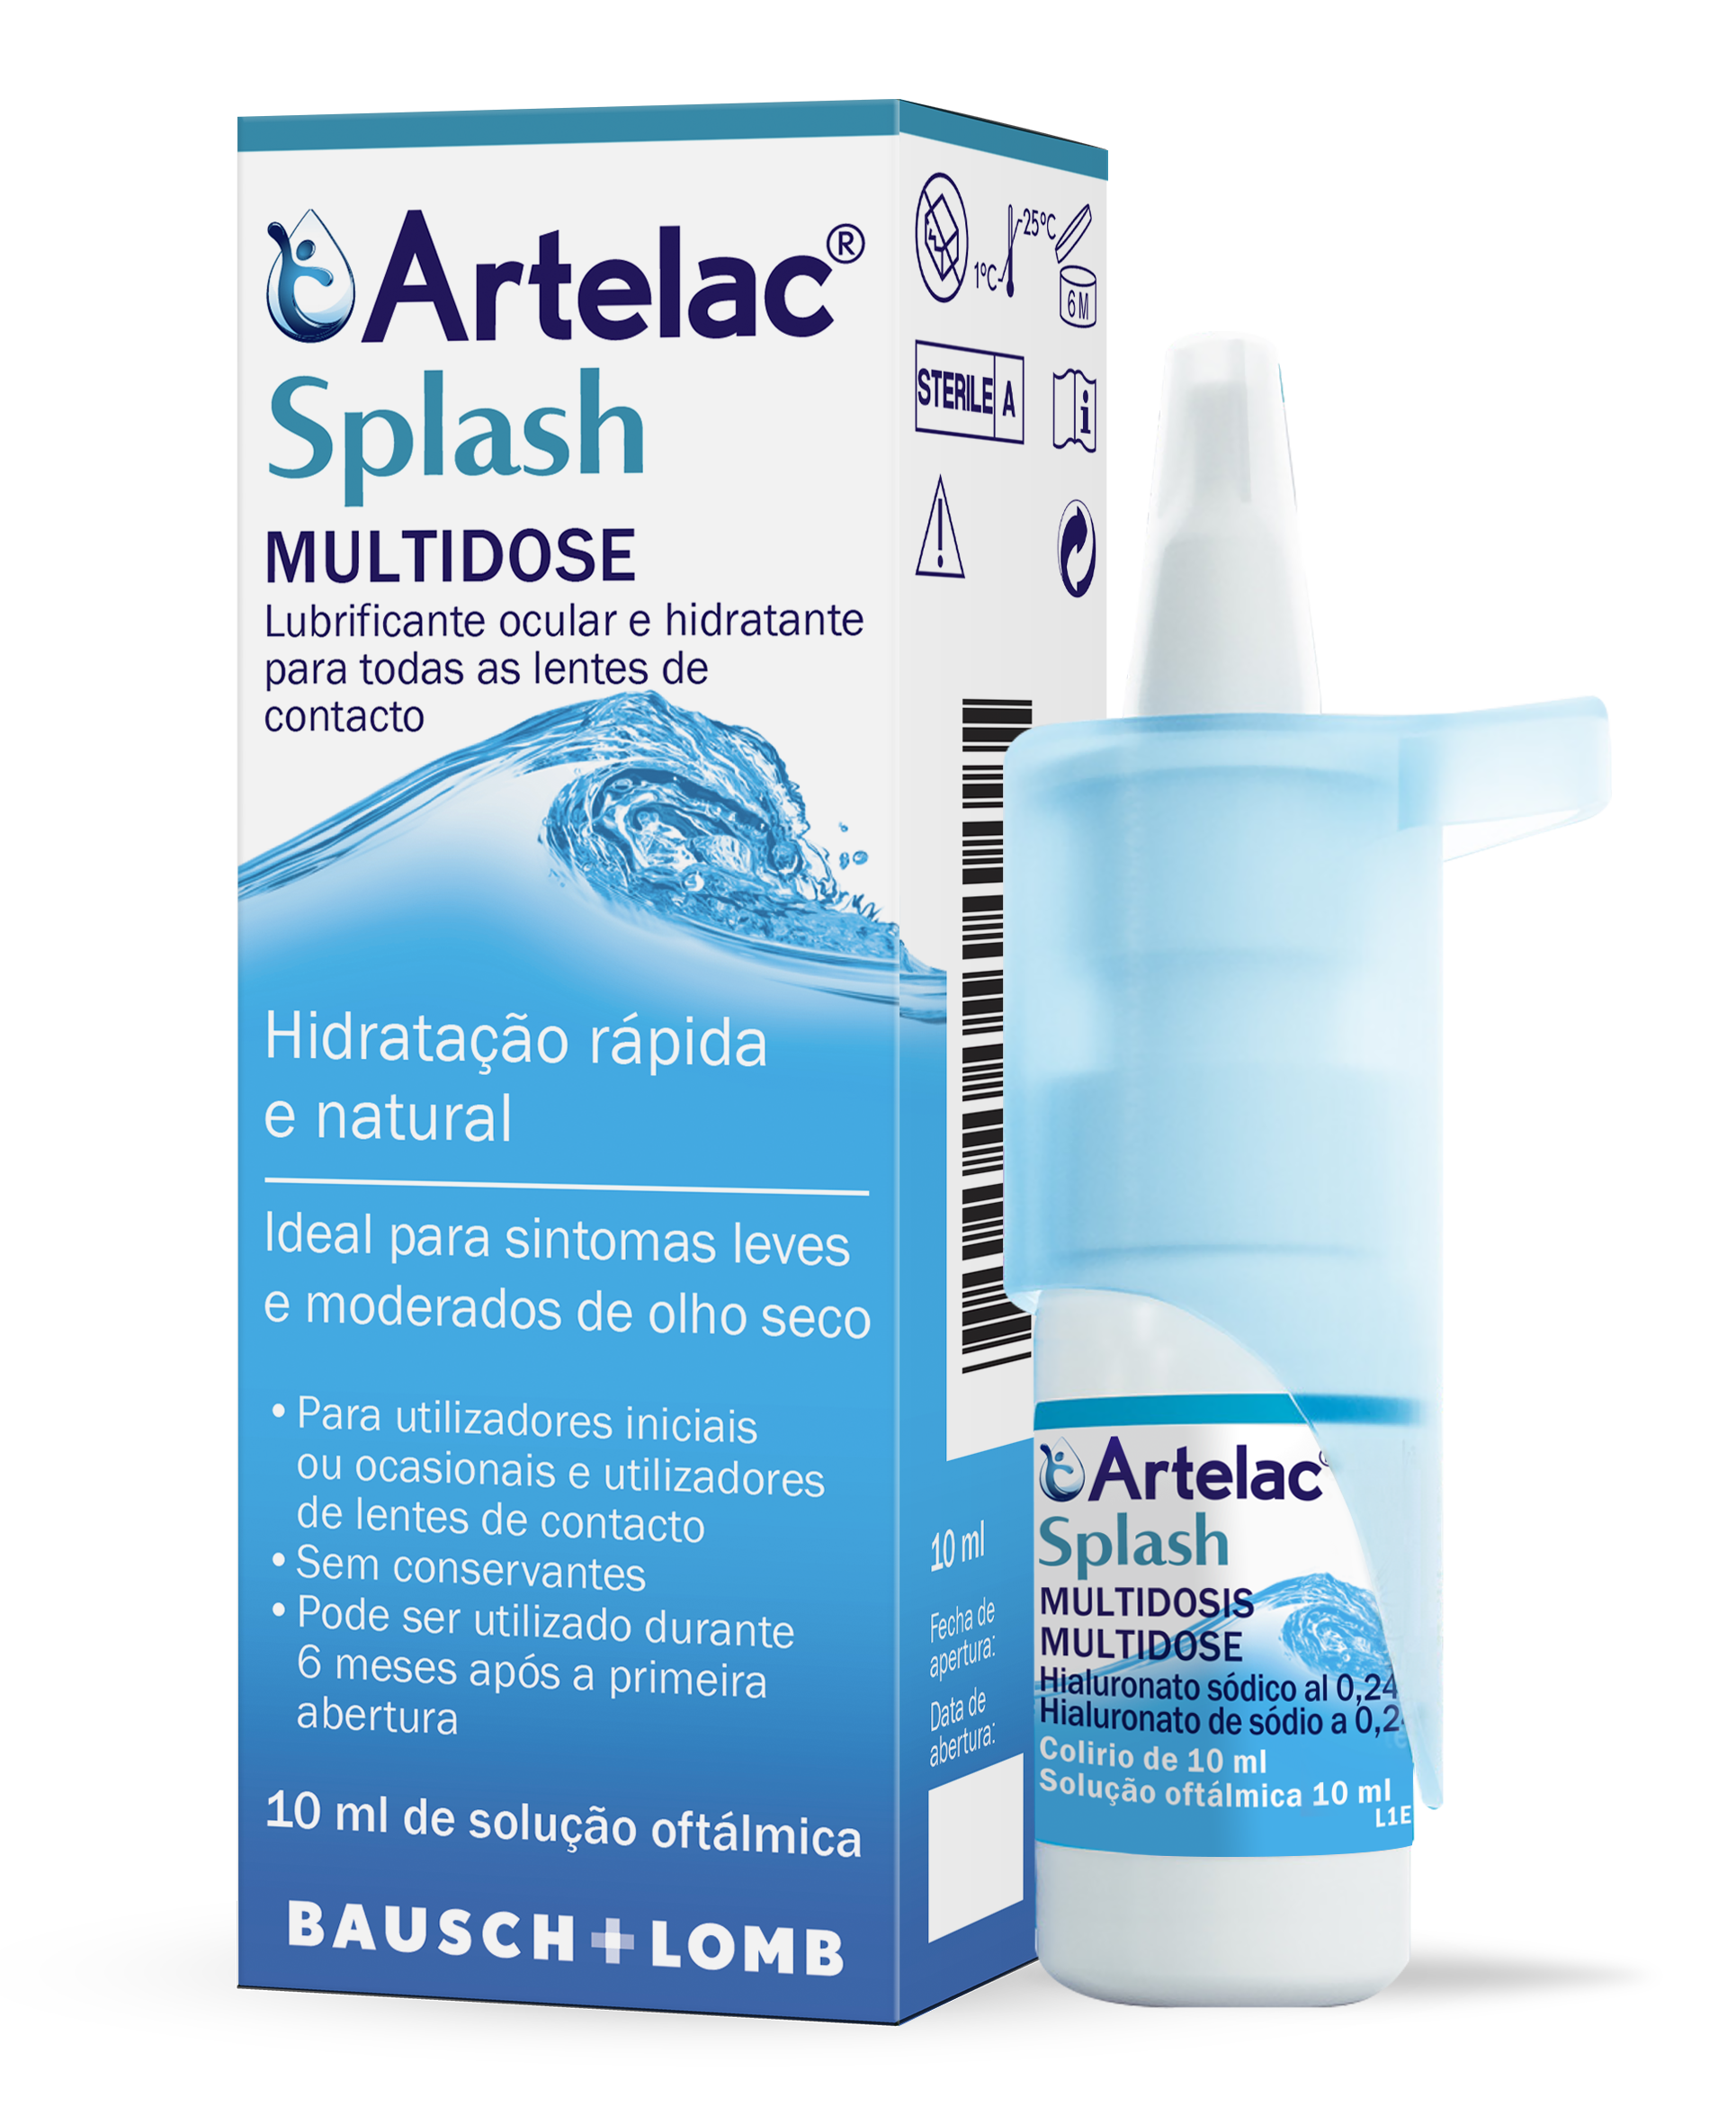 artelac-Splash-PT-multidosis.png